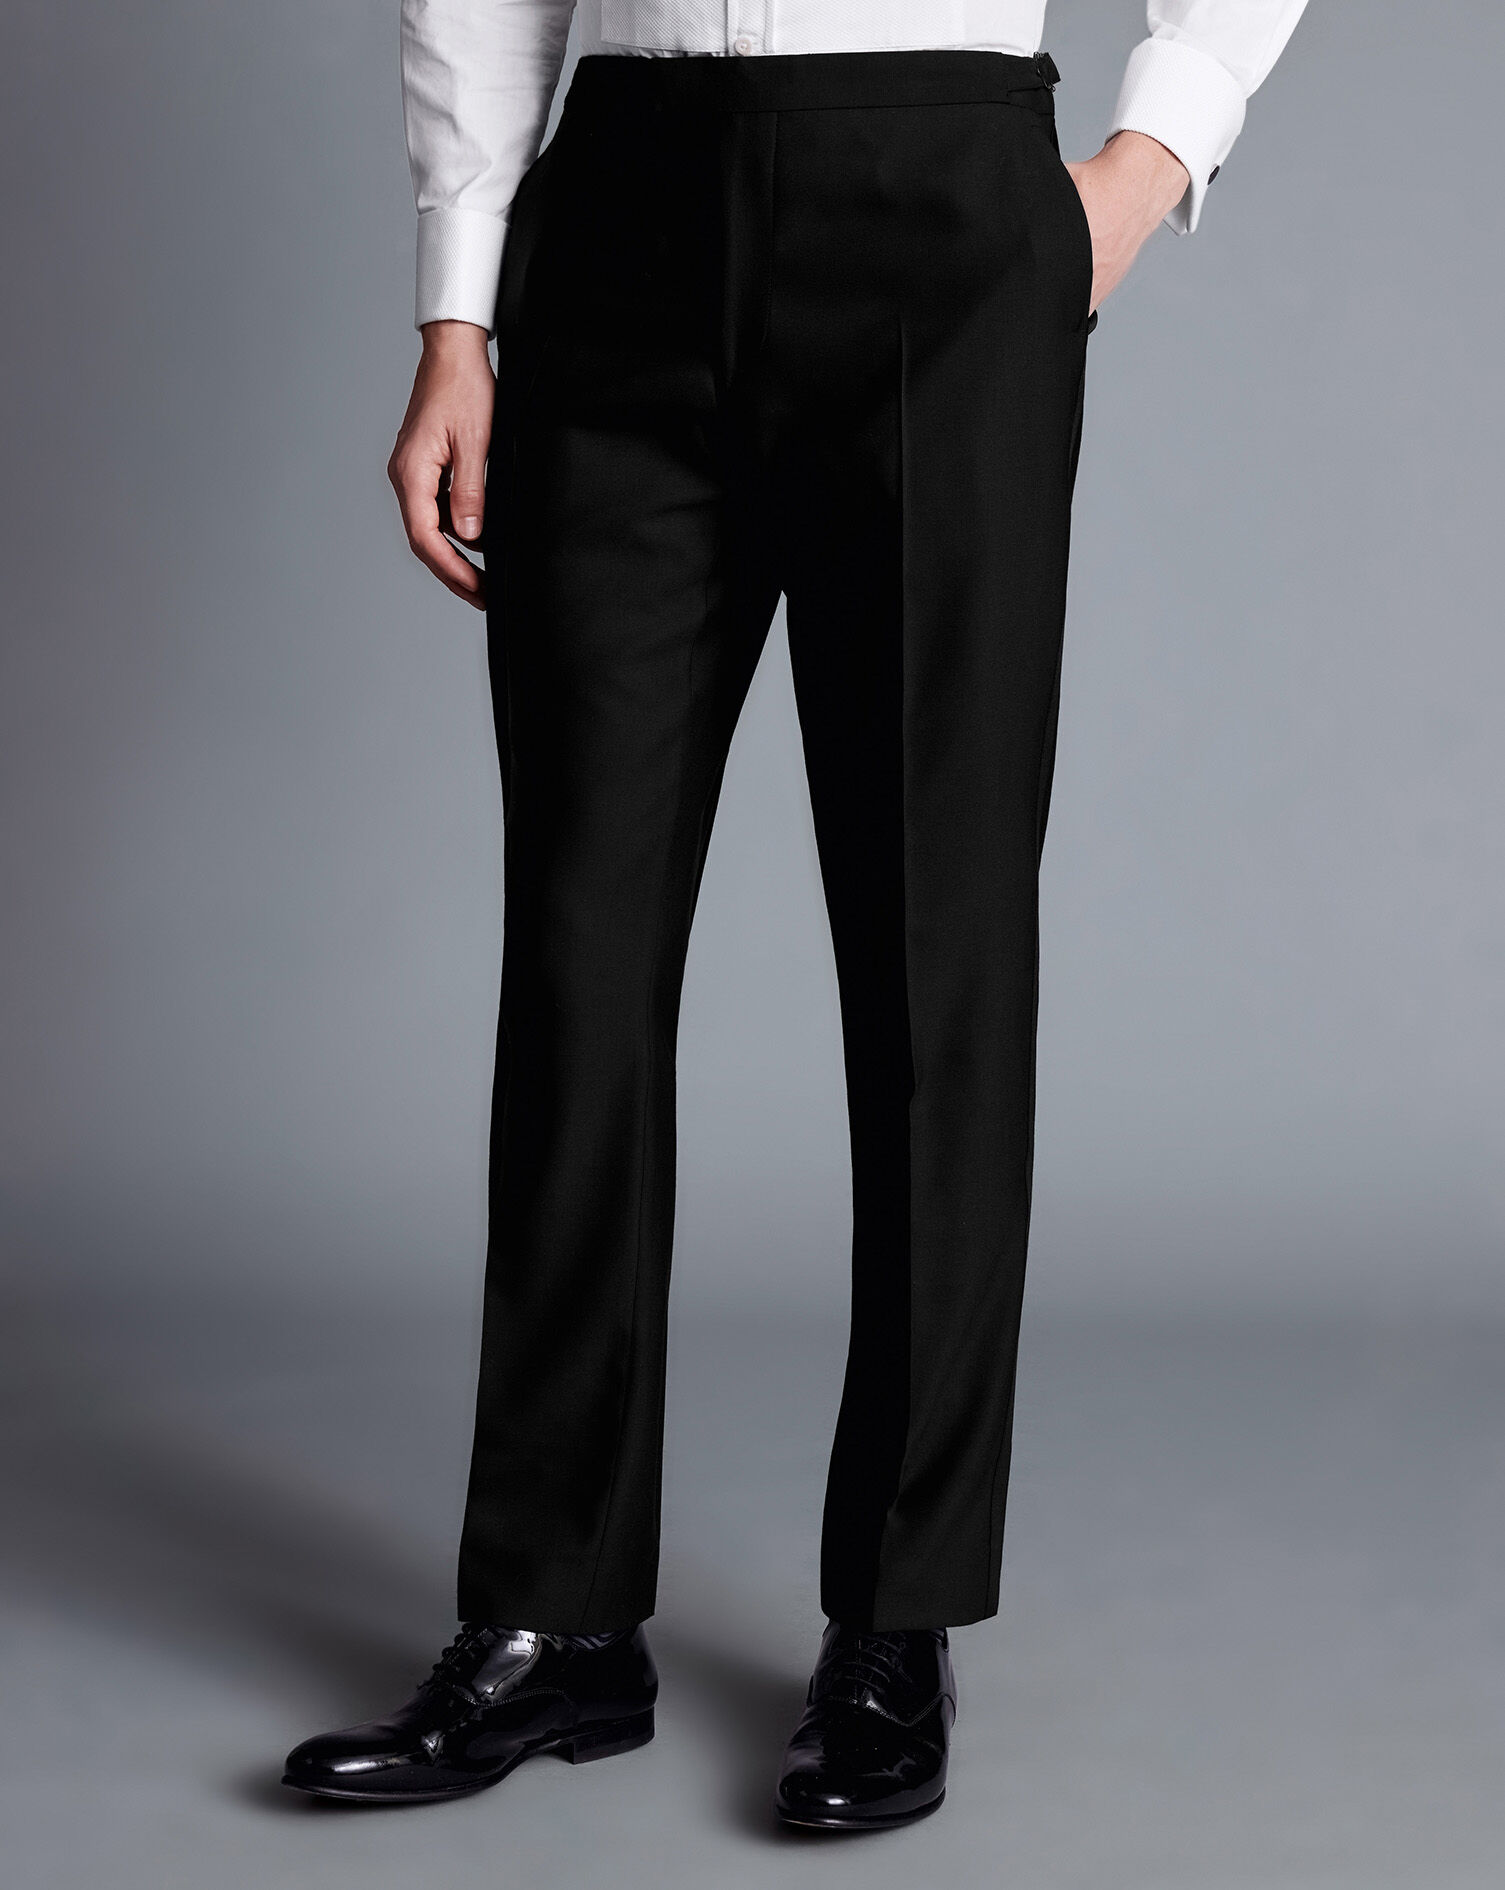 ASOS DESIGN skinny flare black tuxedo suit trousers  ASOS